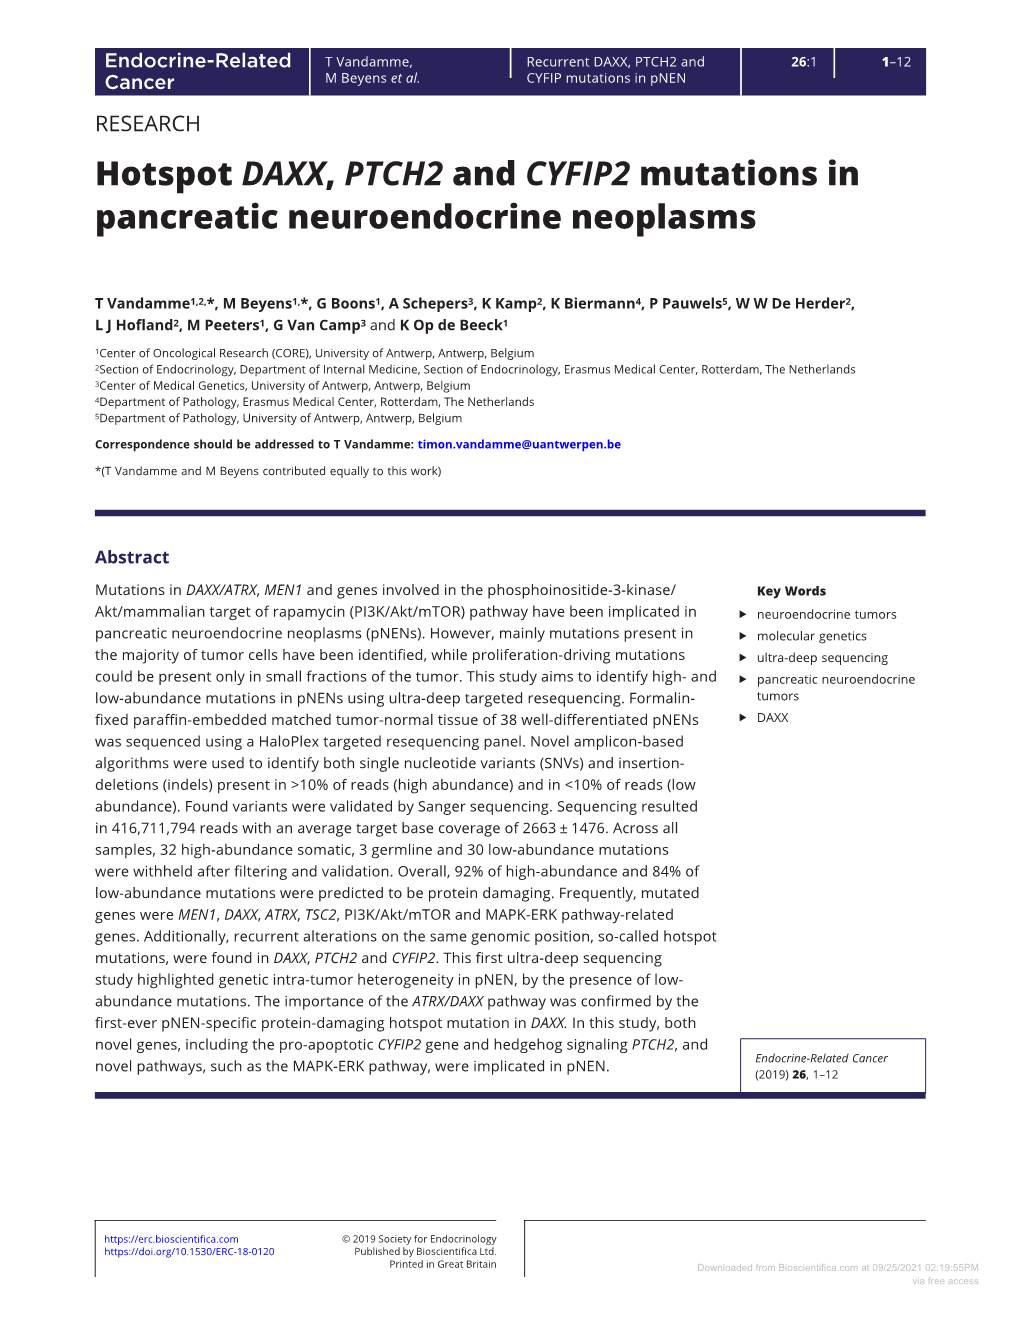 Hotspot DAXX, PTCH2 and CYFIP2 Mutations in Pancreatic Neuroendocrine Neoplasms